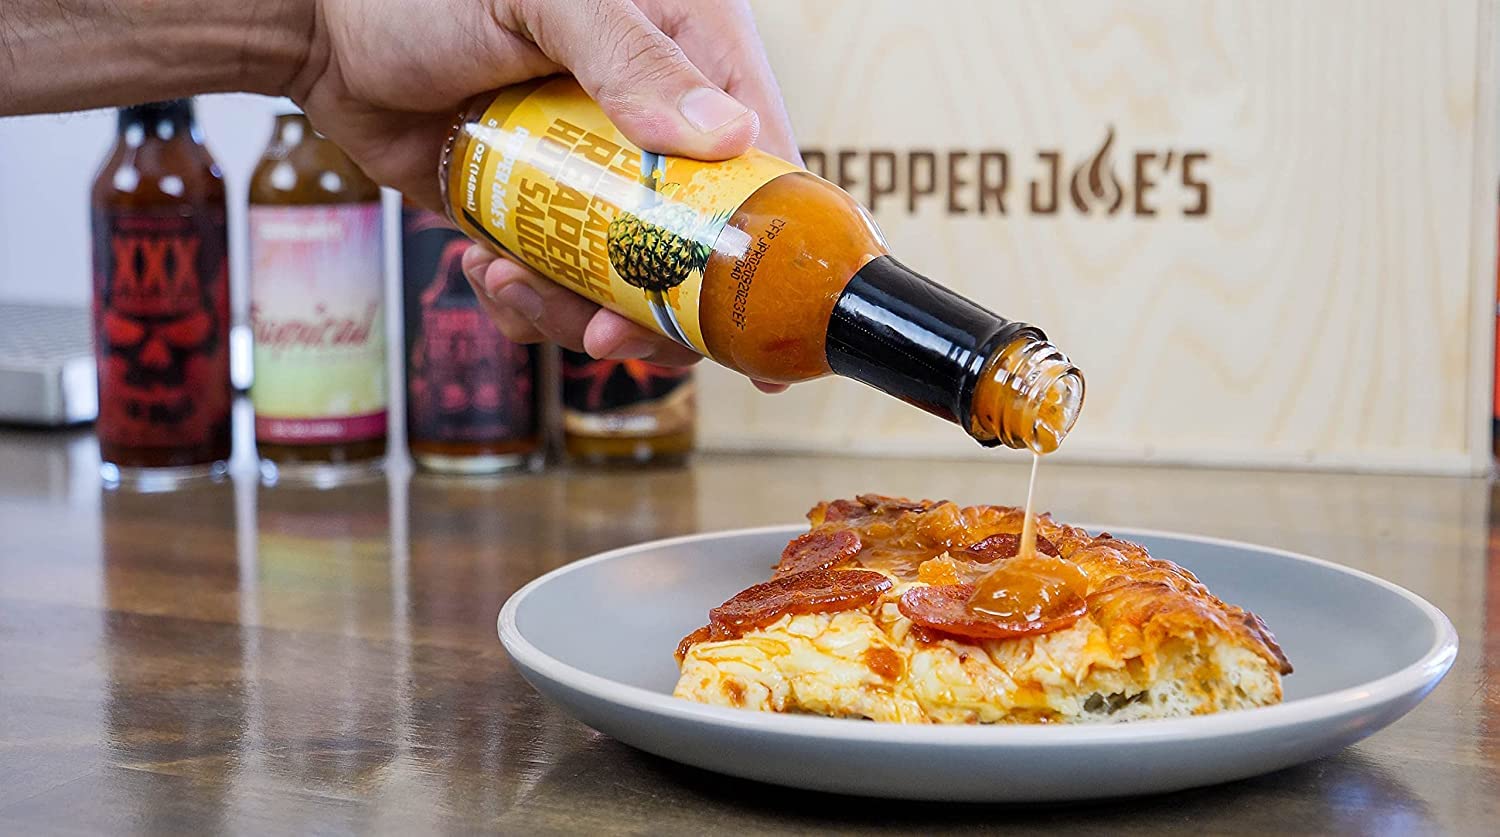 Pepper Joe's Carolina Reaper Hot Sauce gift pack - Pineapple Reaper hot sauce pour on pizza